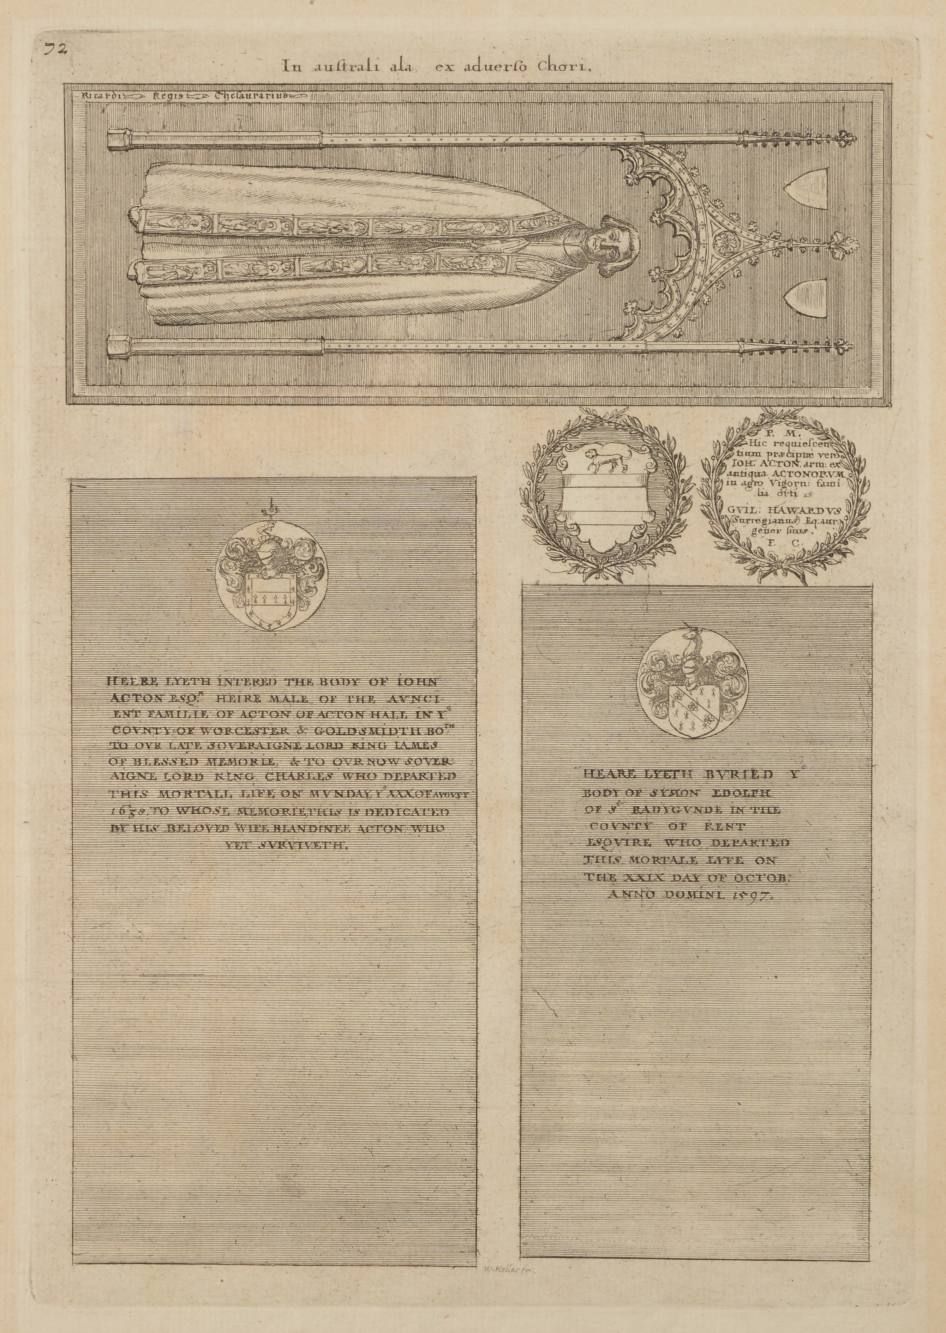 Vaclav Hollar (1607-1677) Richard Hall ILLUSTRATION WITH TOMBSTONES AND ARCHITEC&hellip;